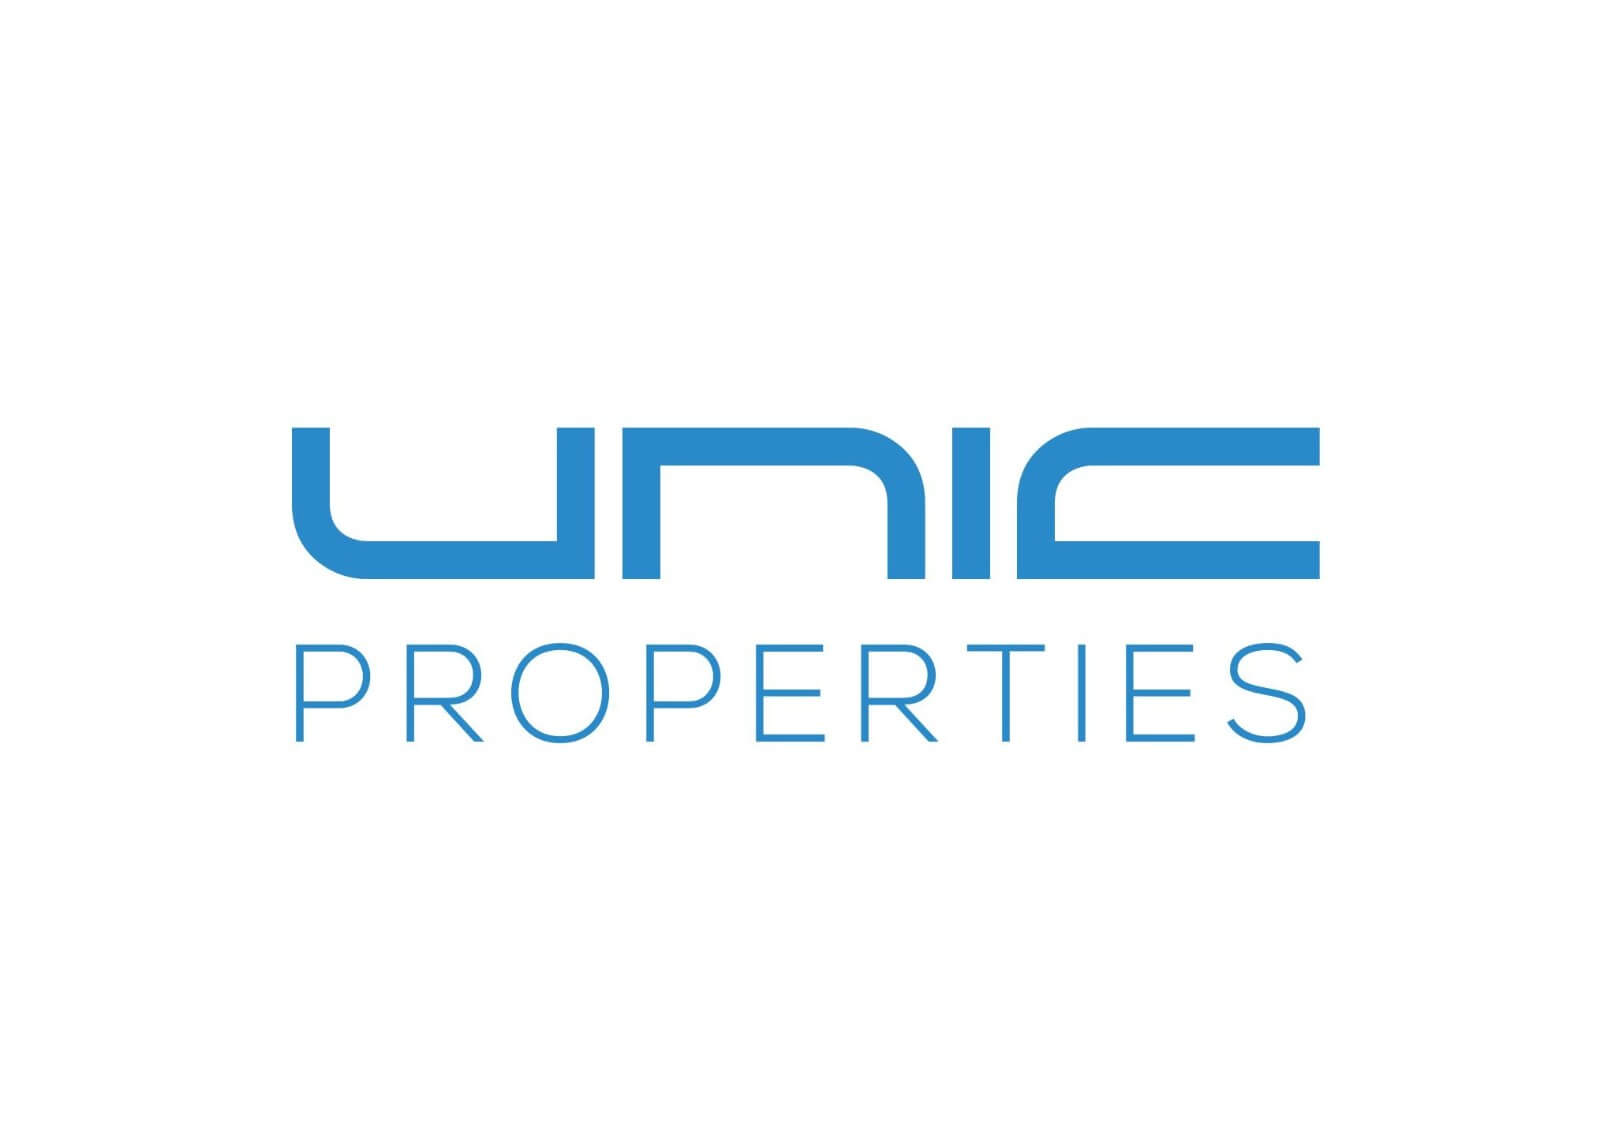 UNIC Properties